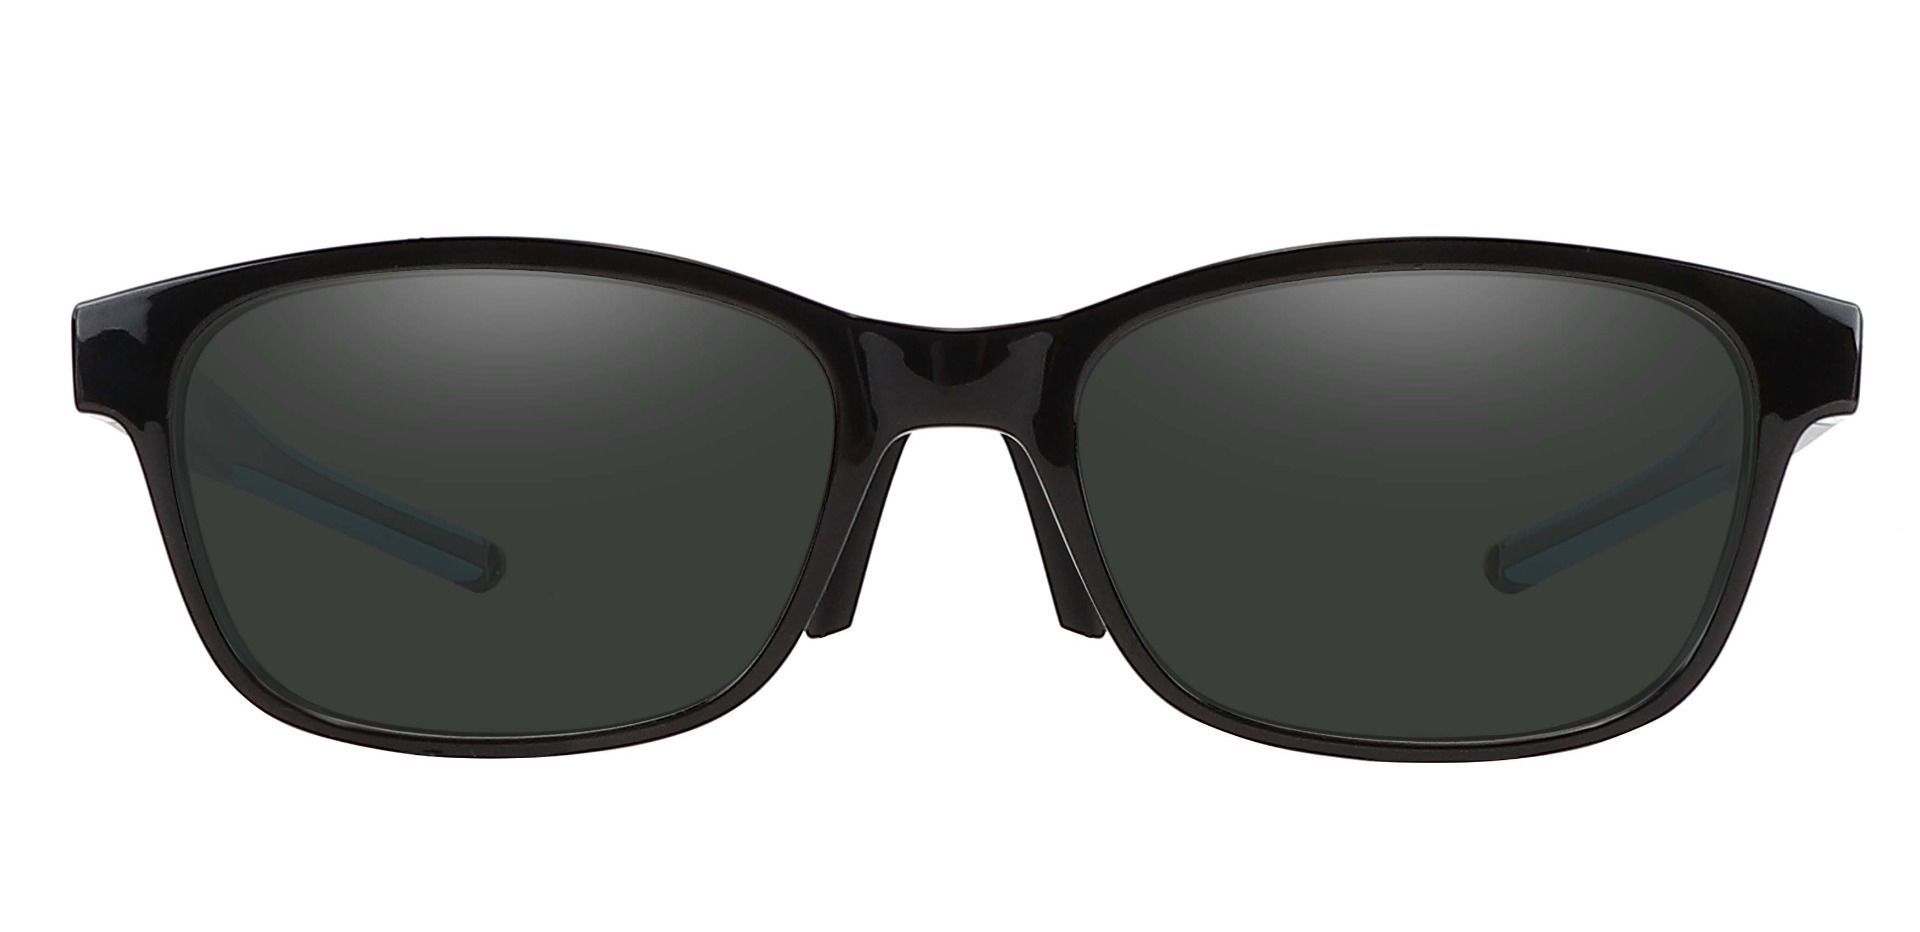 Higgins Rectangle Lined Bifocal Sunglasses - Black Frame With Gray Lenses